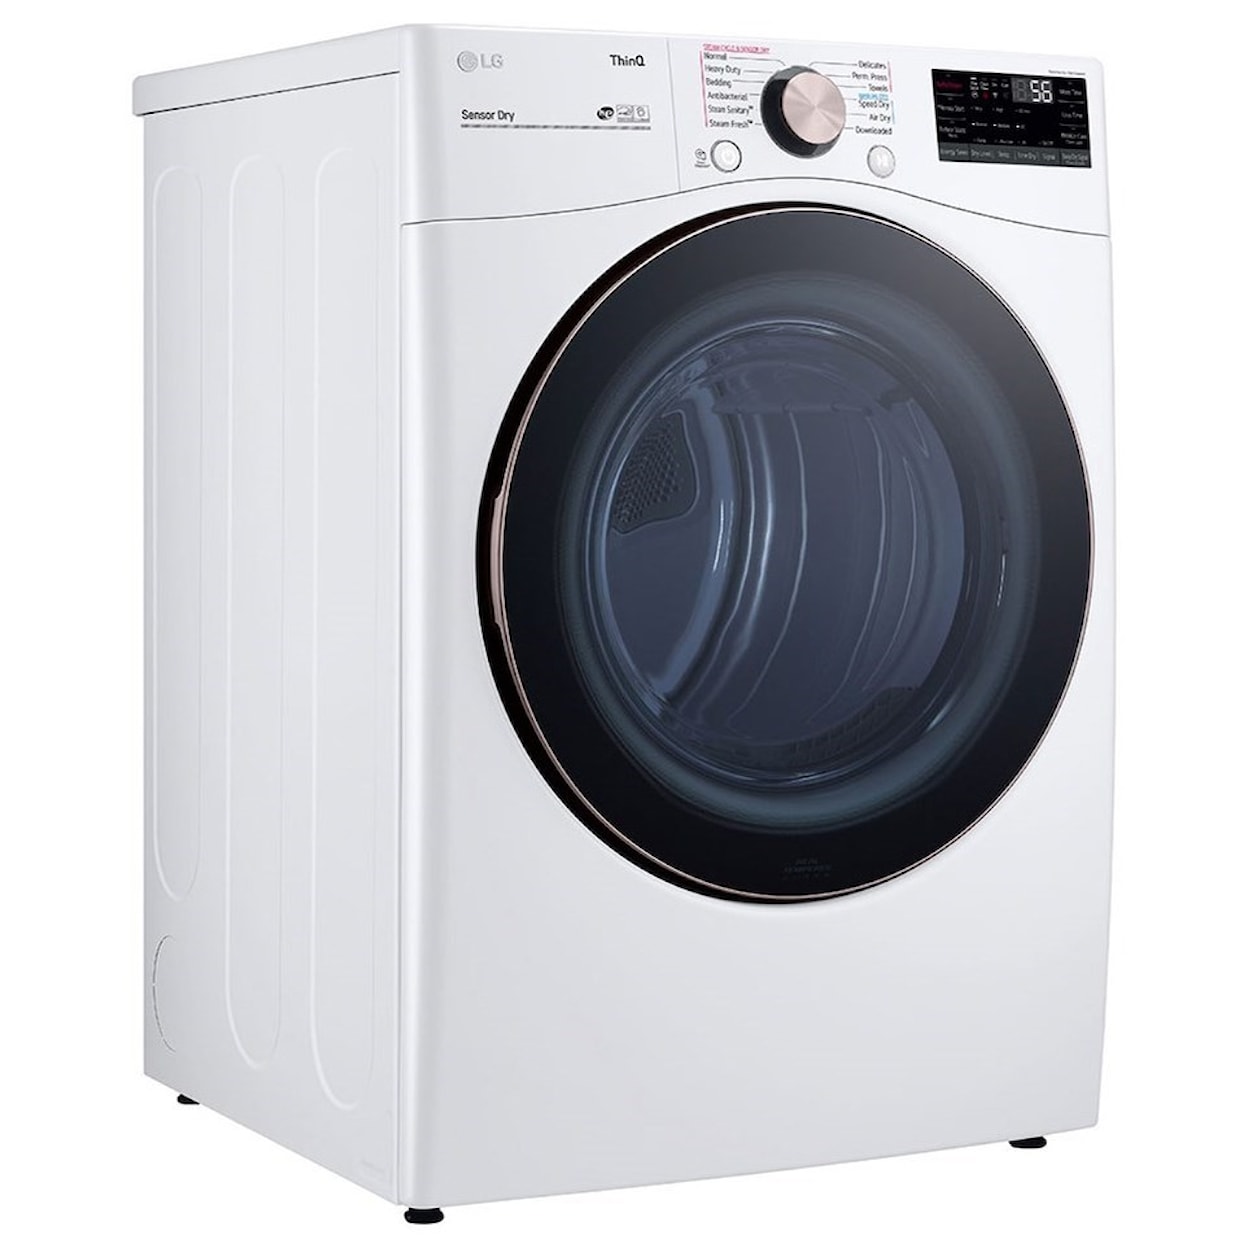 LG Appliances Dryers 7.4 cu. ft. Smart Front Load Electric Dryer